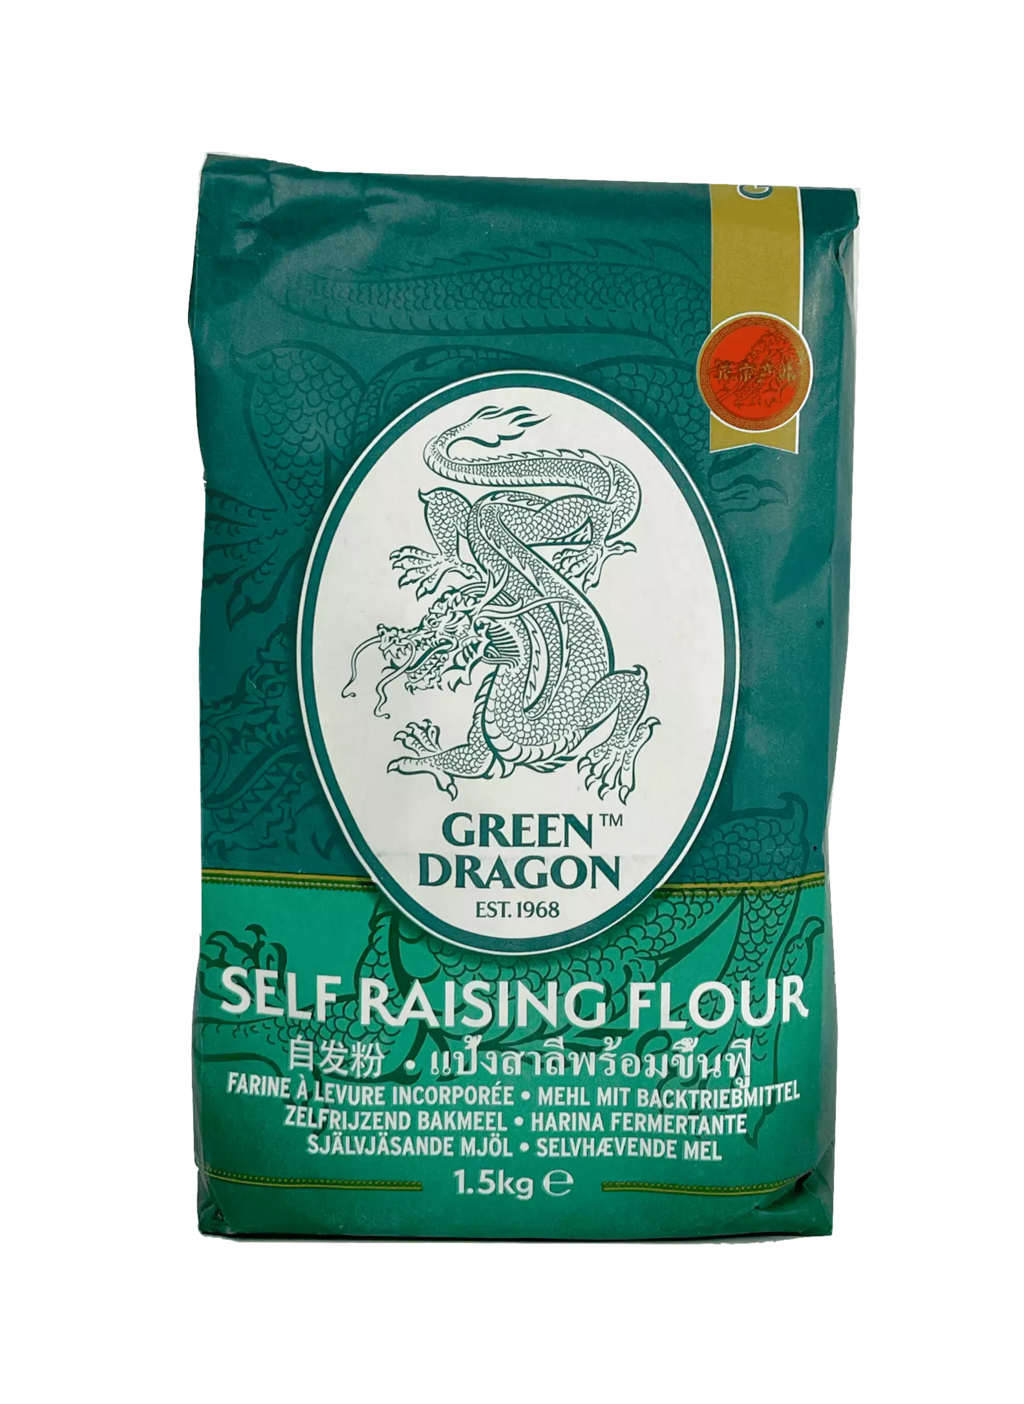 Self Rasing Flour 1,5kg Green Dragon